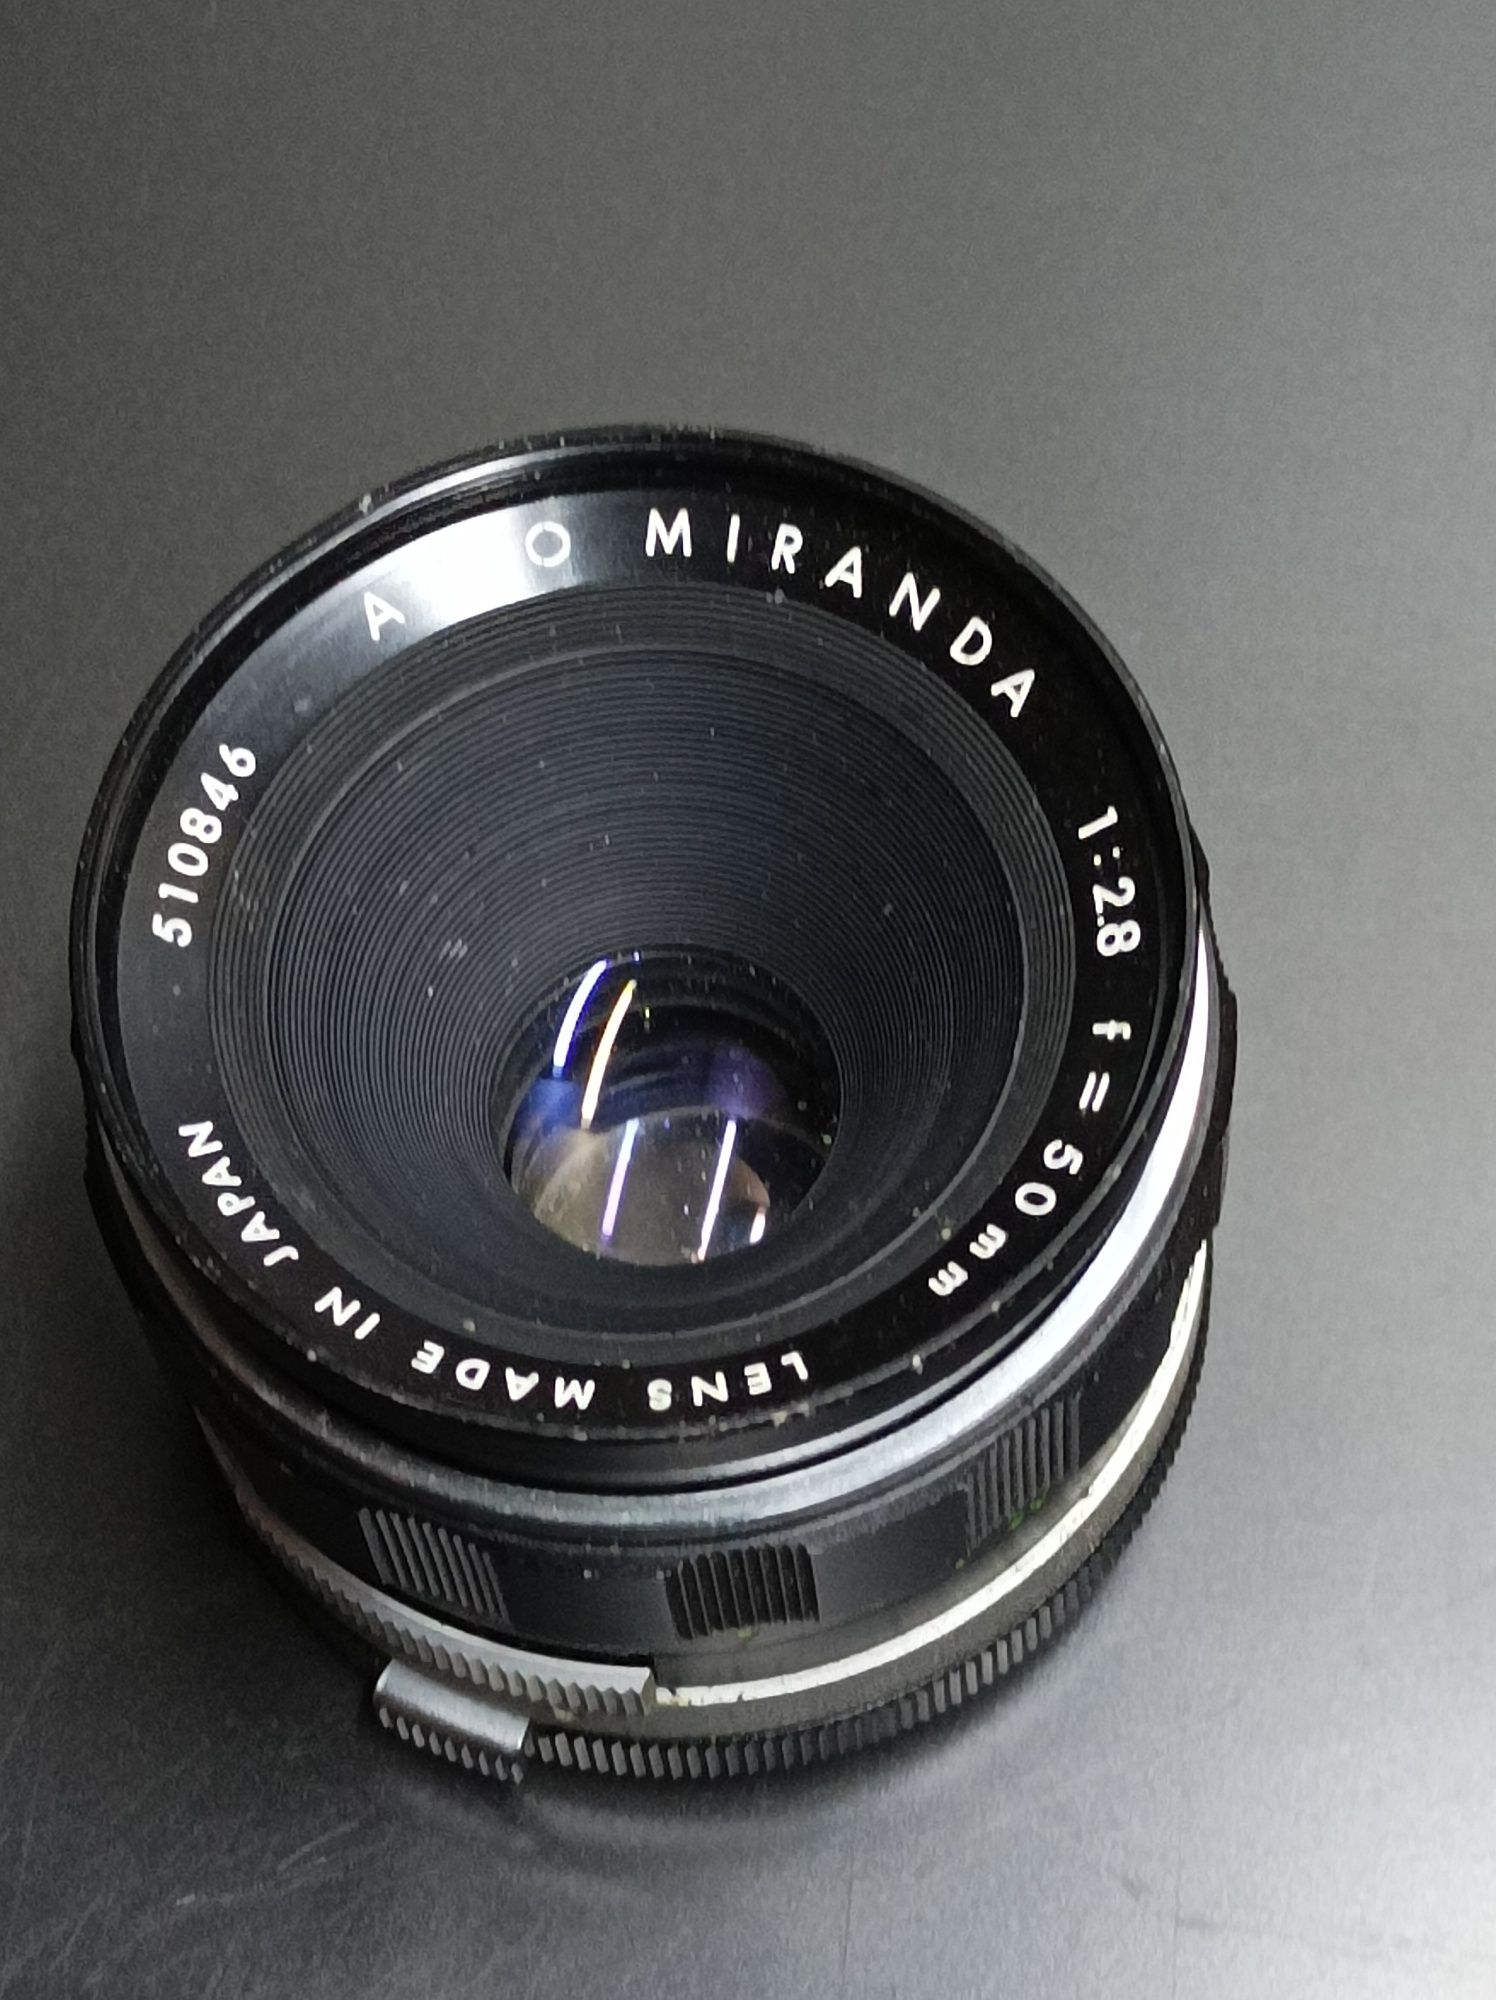 Obiektyw Auto Miranda f:50mm./1:2.8. Tanio!